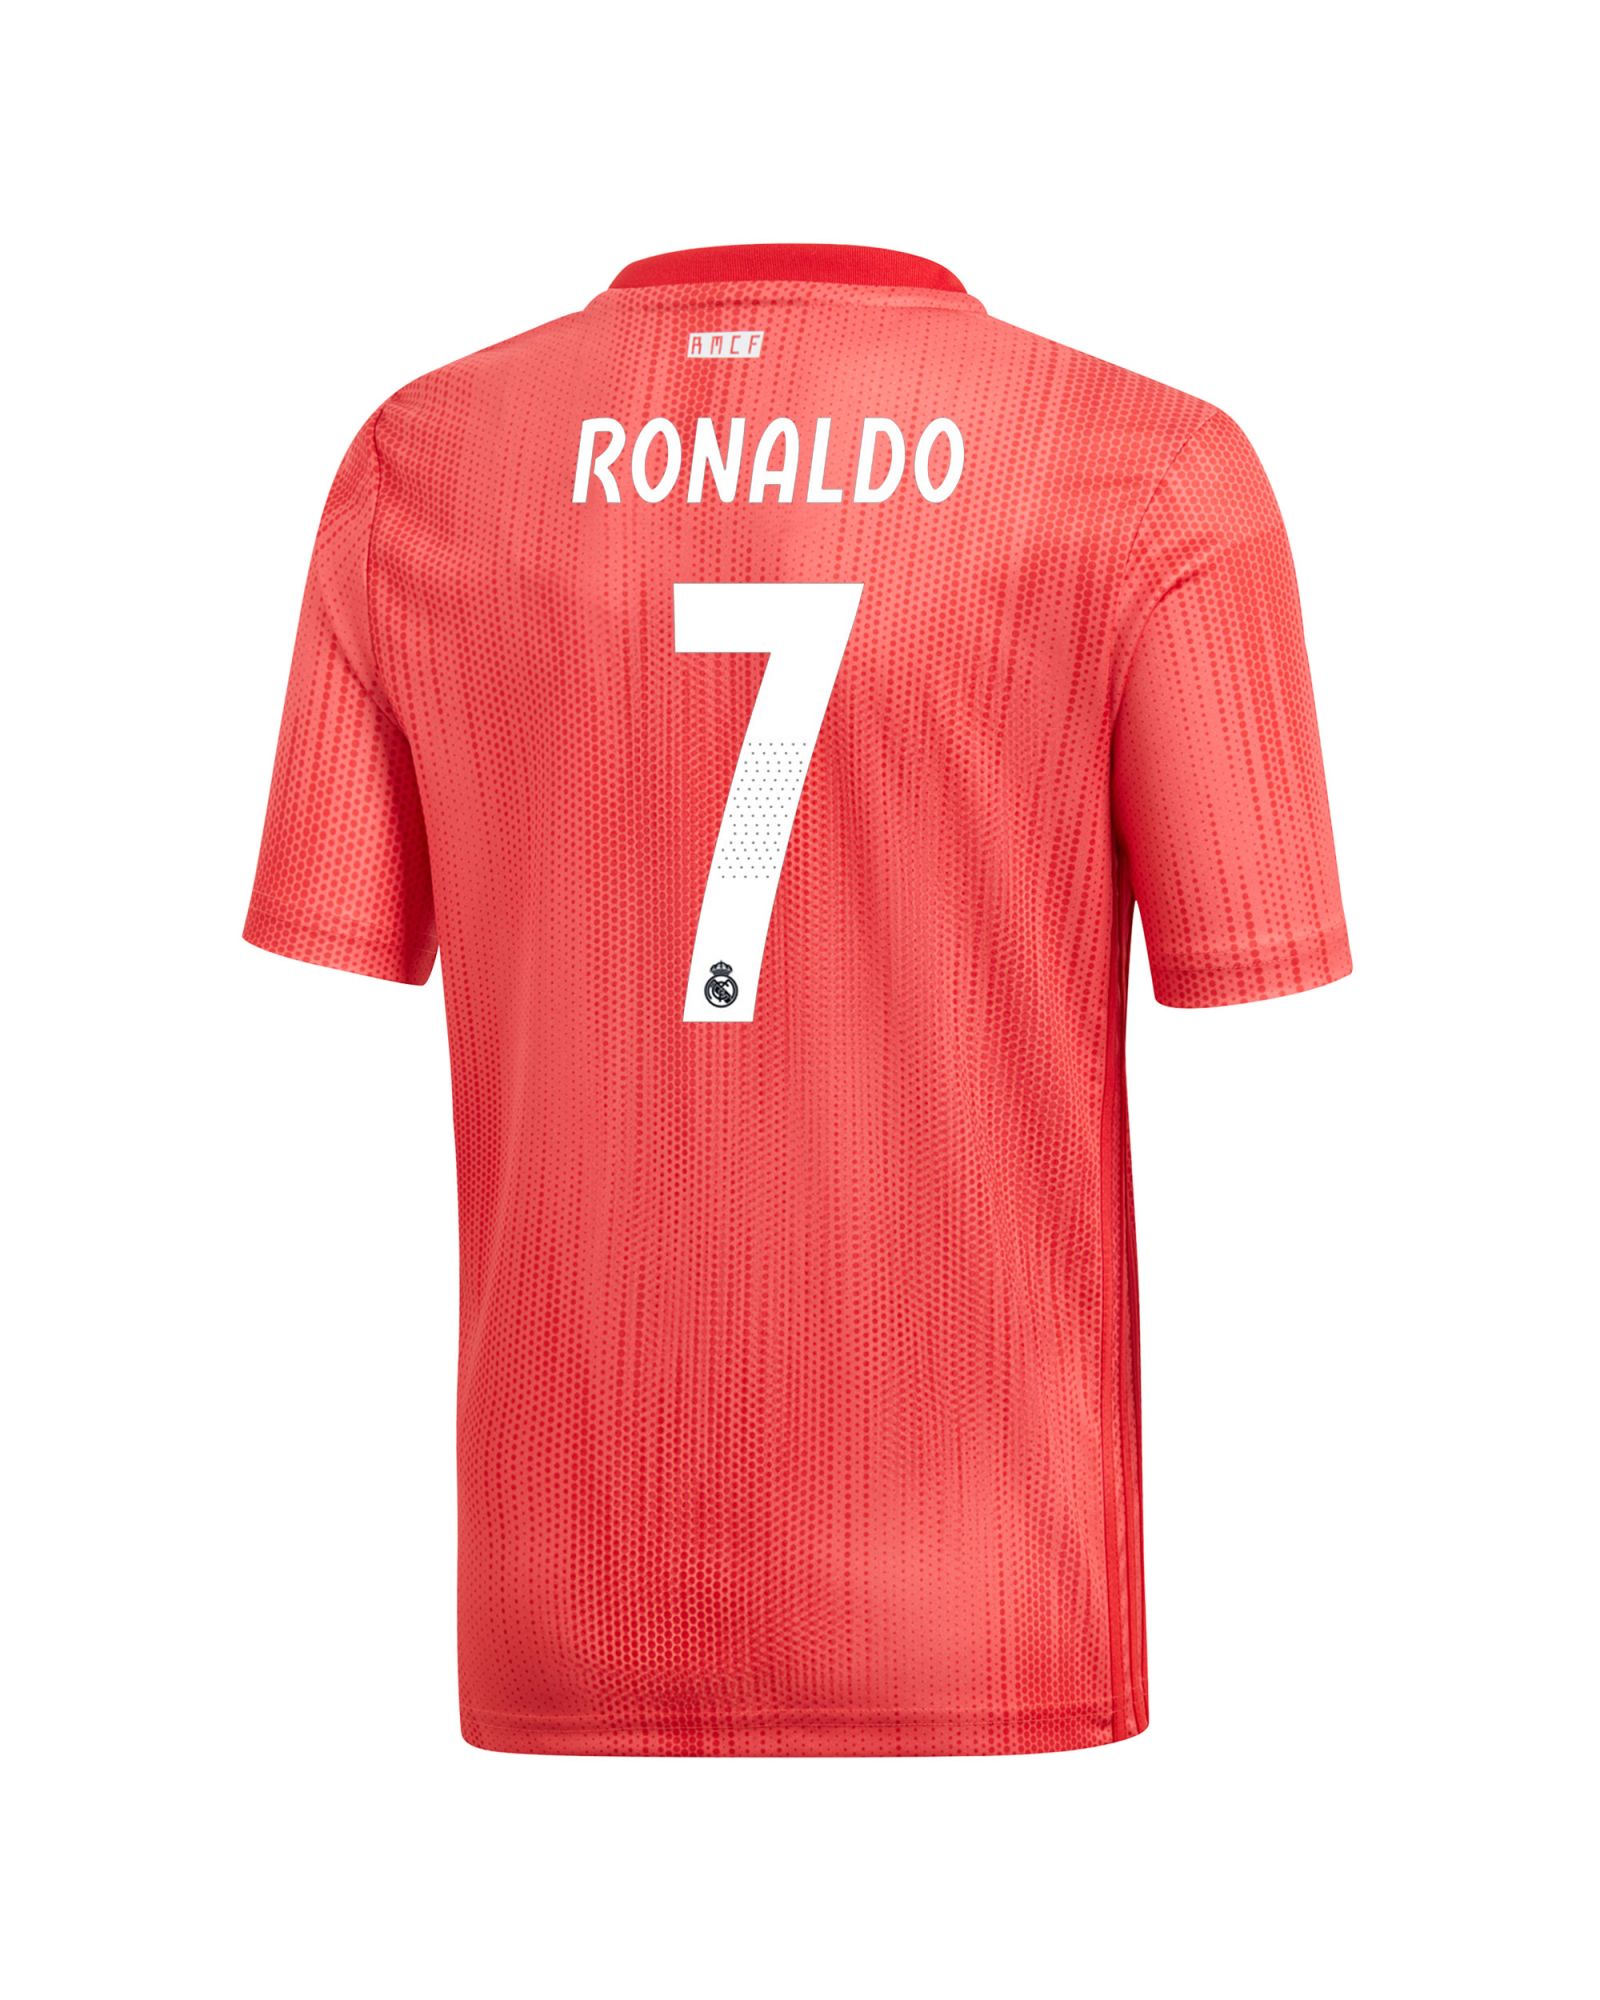 Camiseta 3ª Real Madrid 2018/2019 Ronaldo Junior Coral - Fútbol Factory